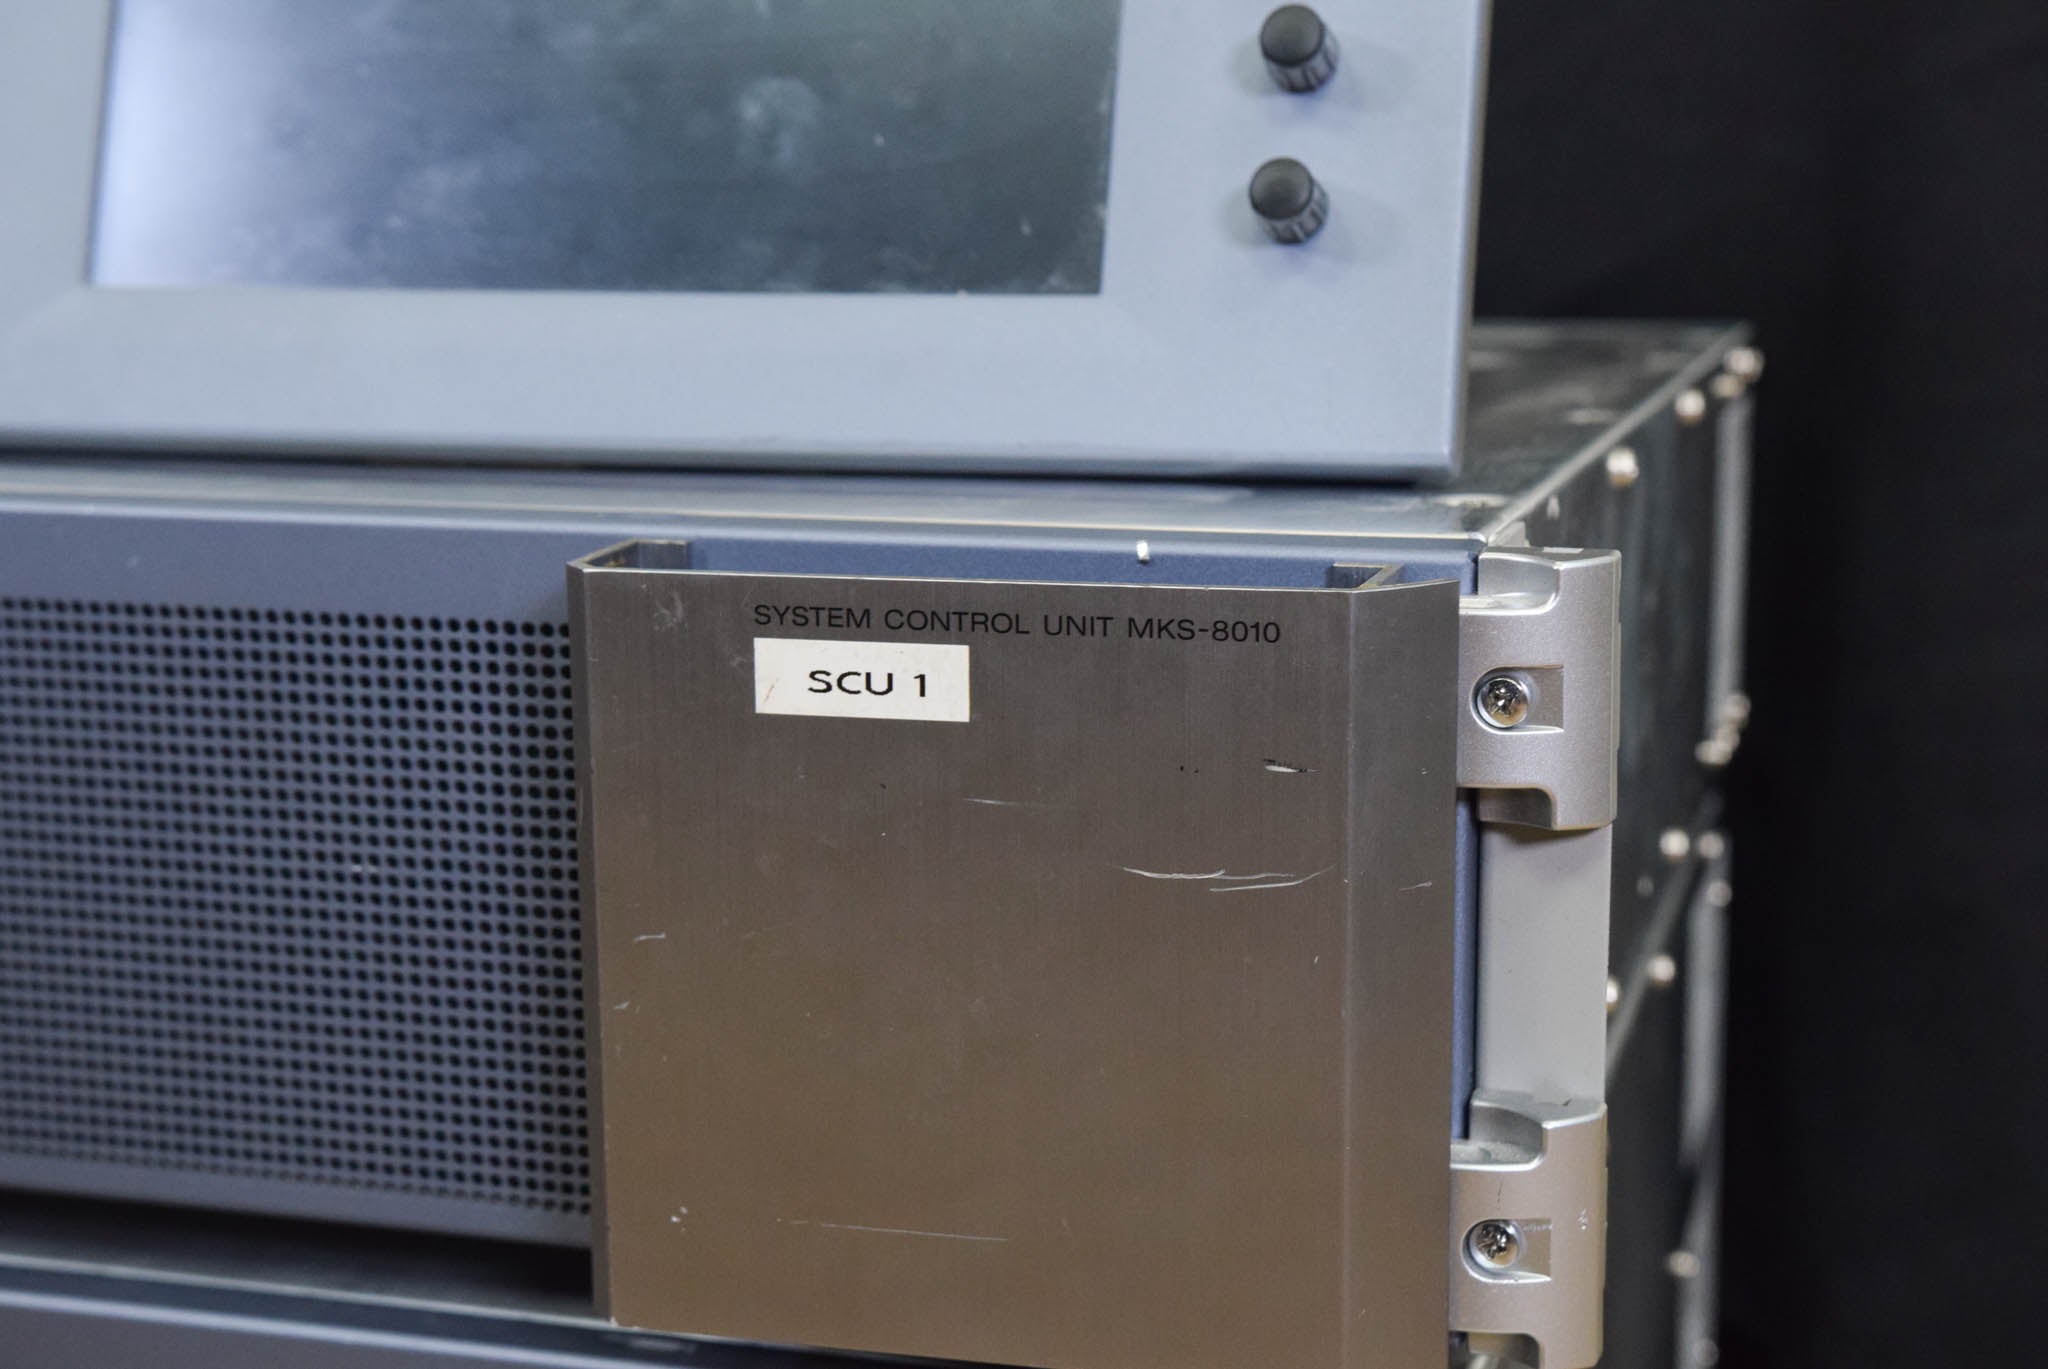 Sony MVS-8000 3 M/E Multi Format Video Switcher